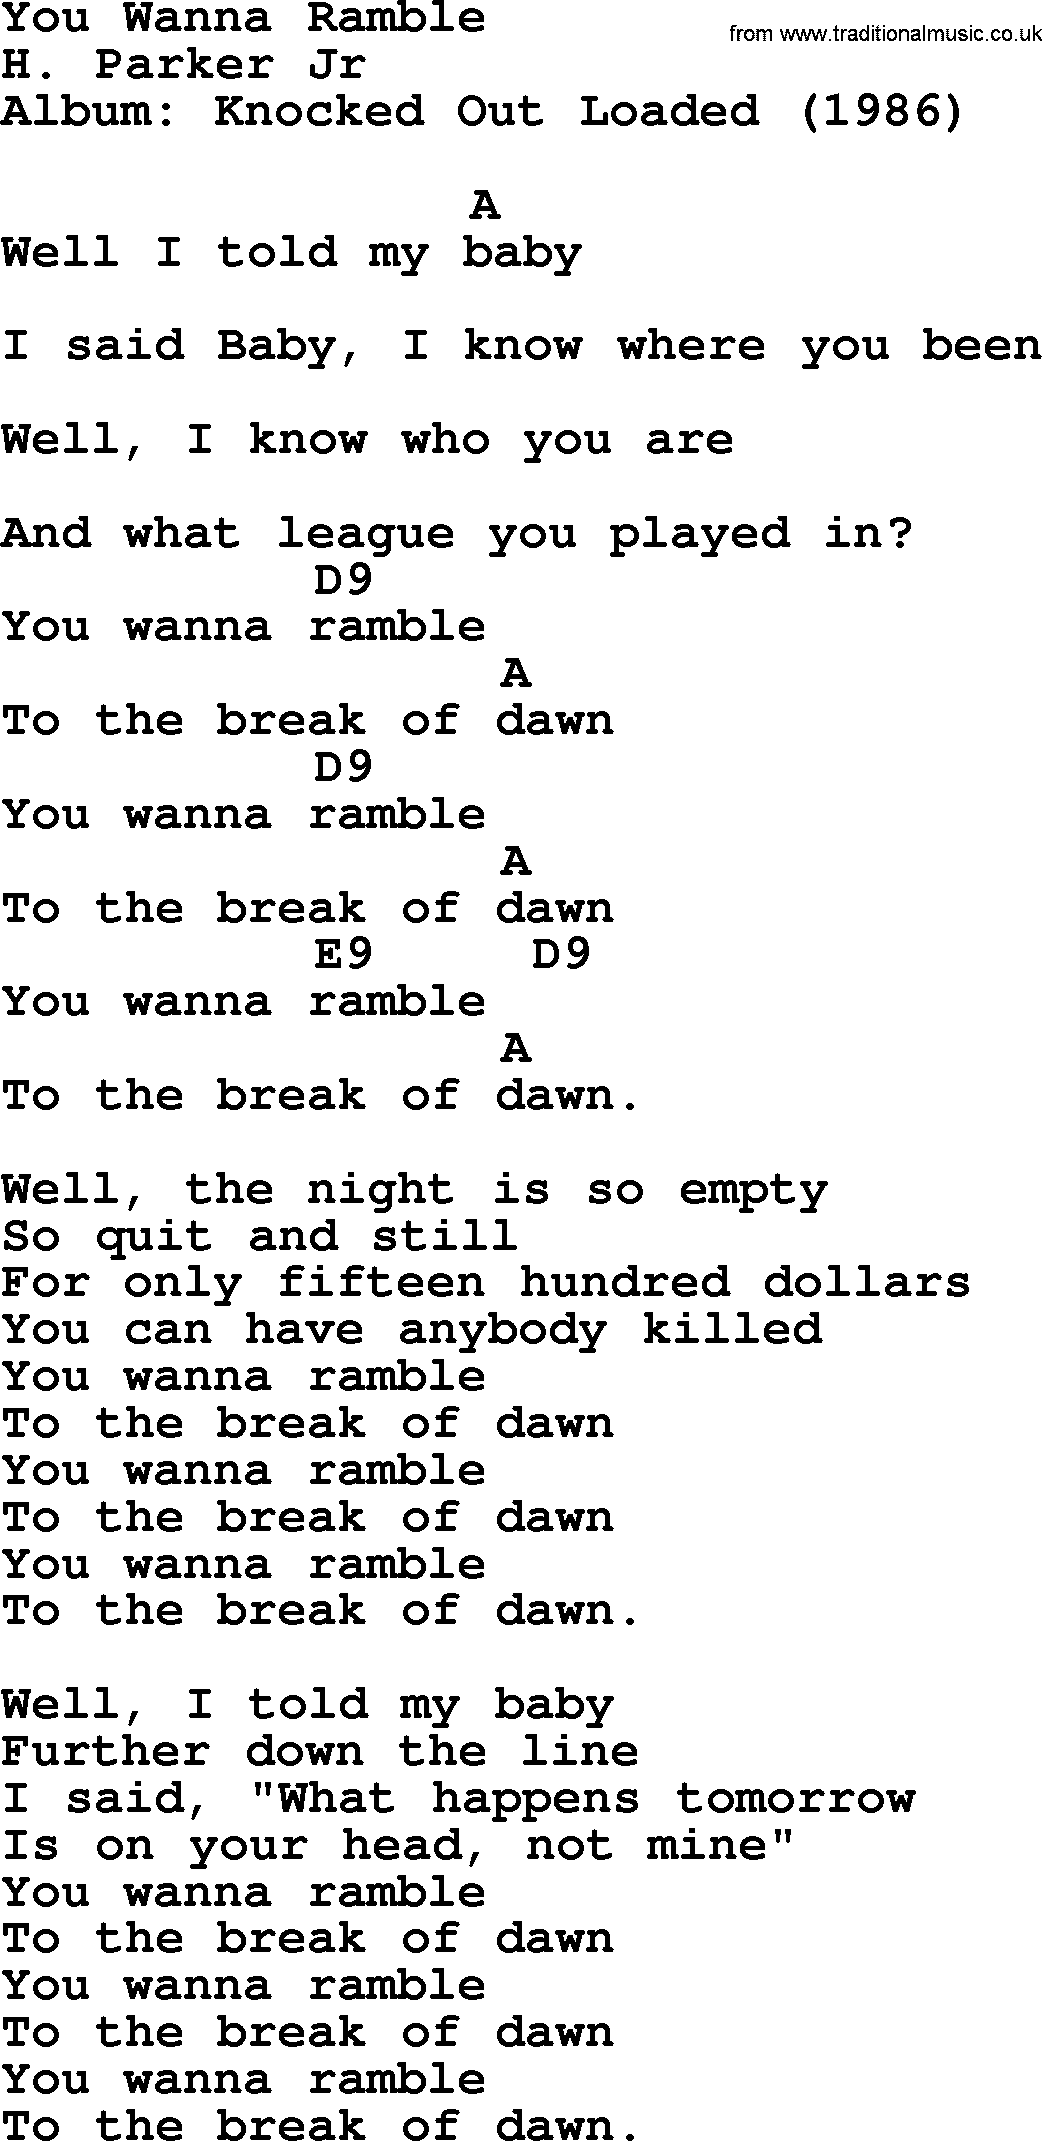 Bob Dylan song, lyrics with chords - You Wanna Ramble